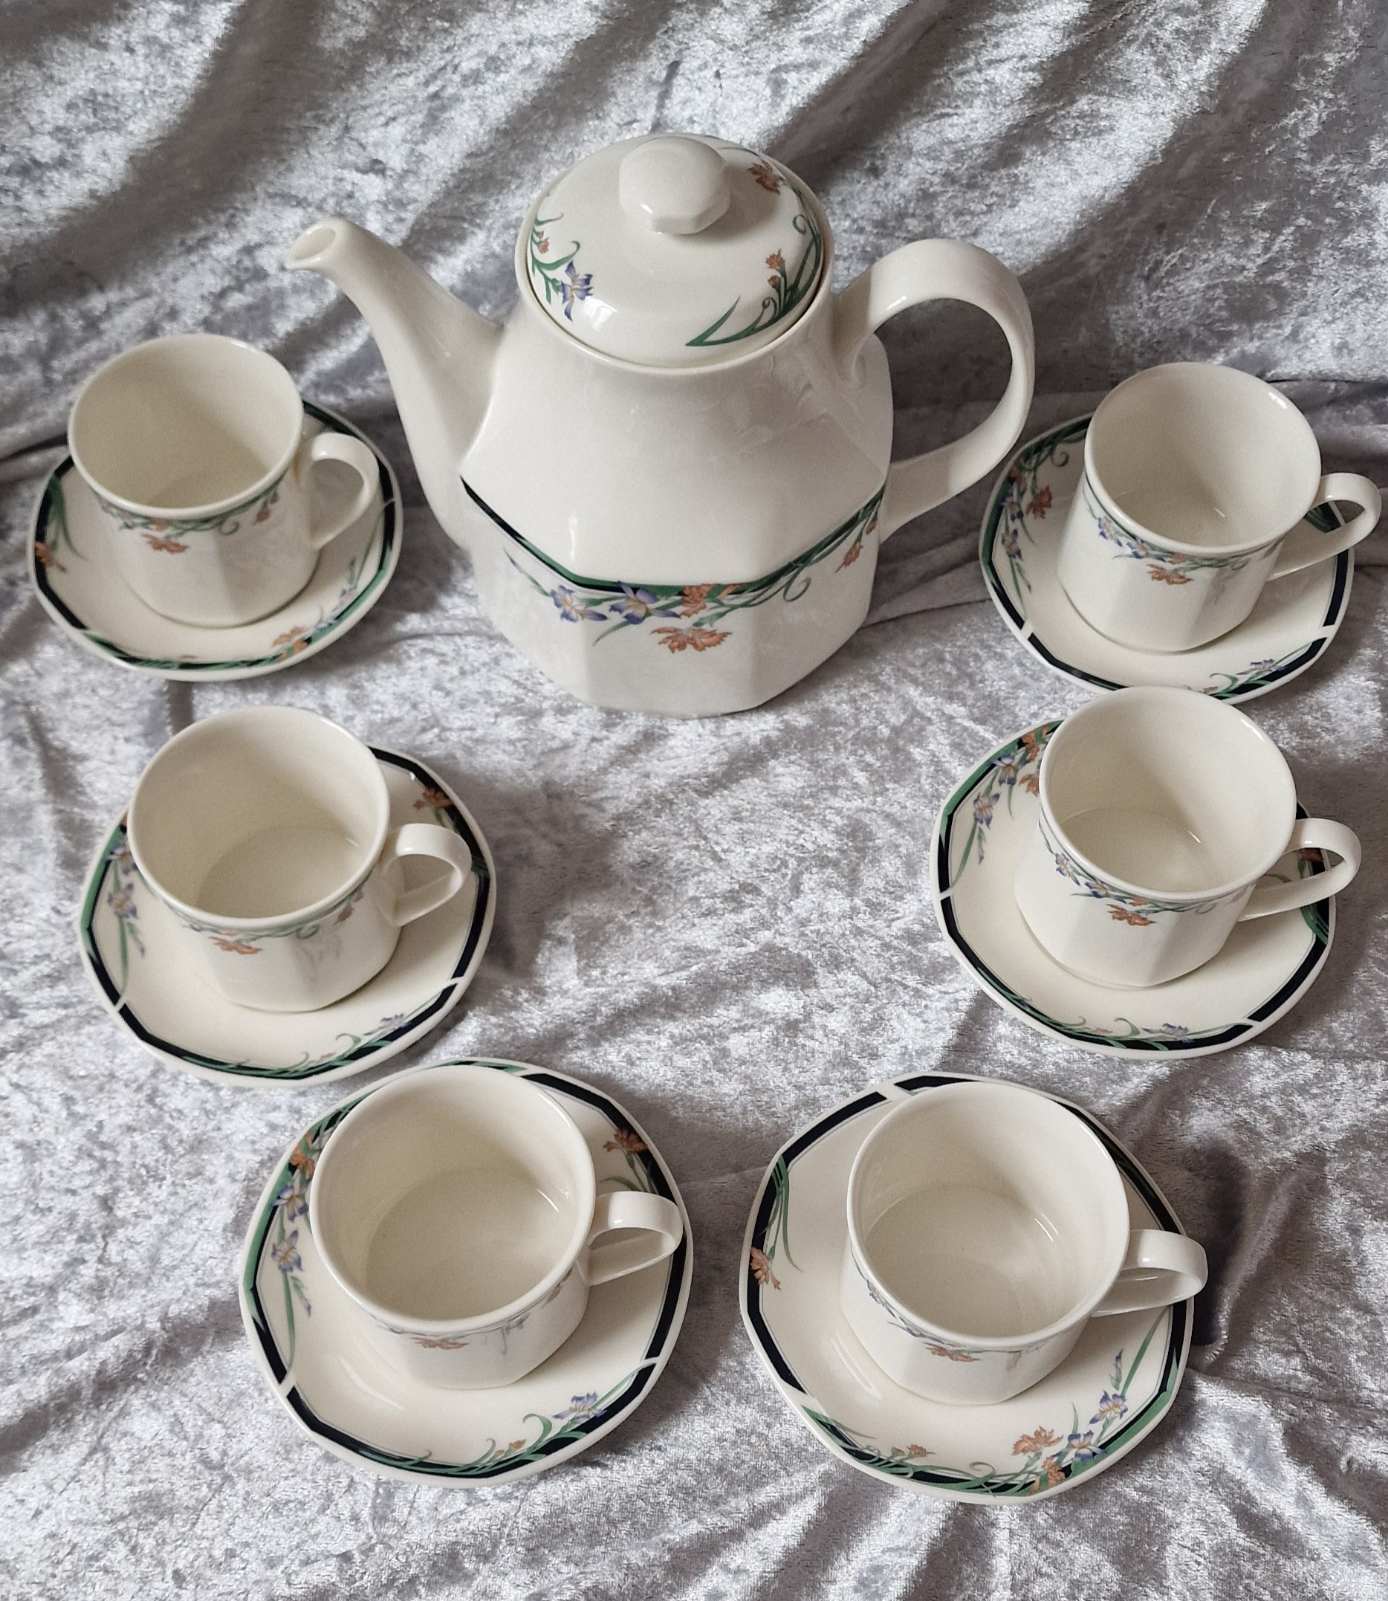 Royal Doulton tea set with six elegant tea cups and matching saucers.